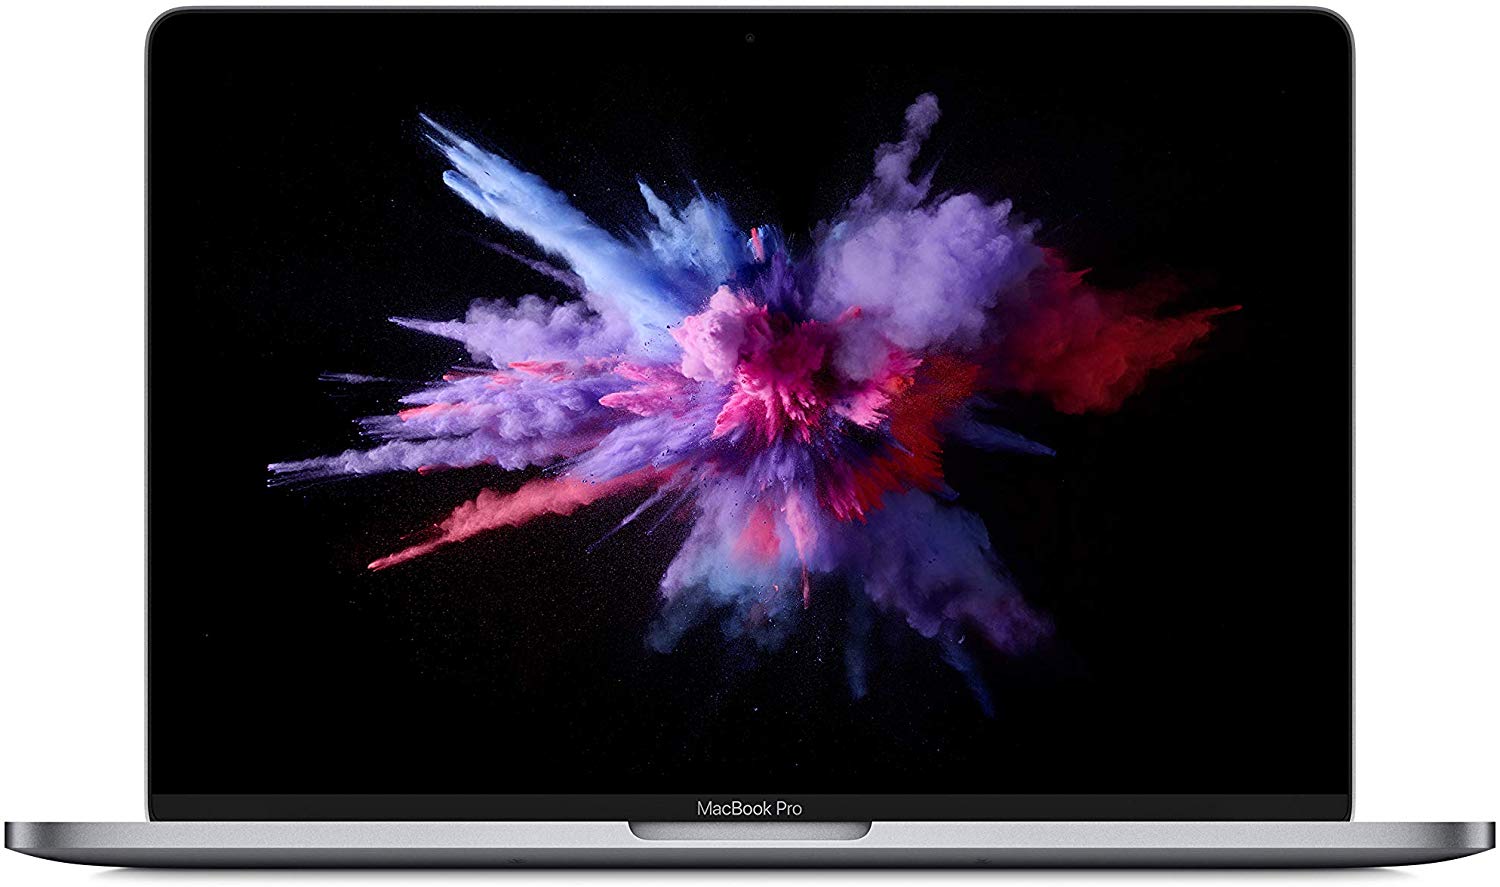 13-inch MacBook Pro with Intel Processor